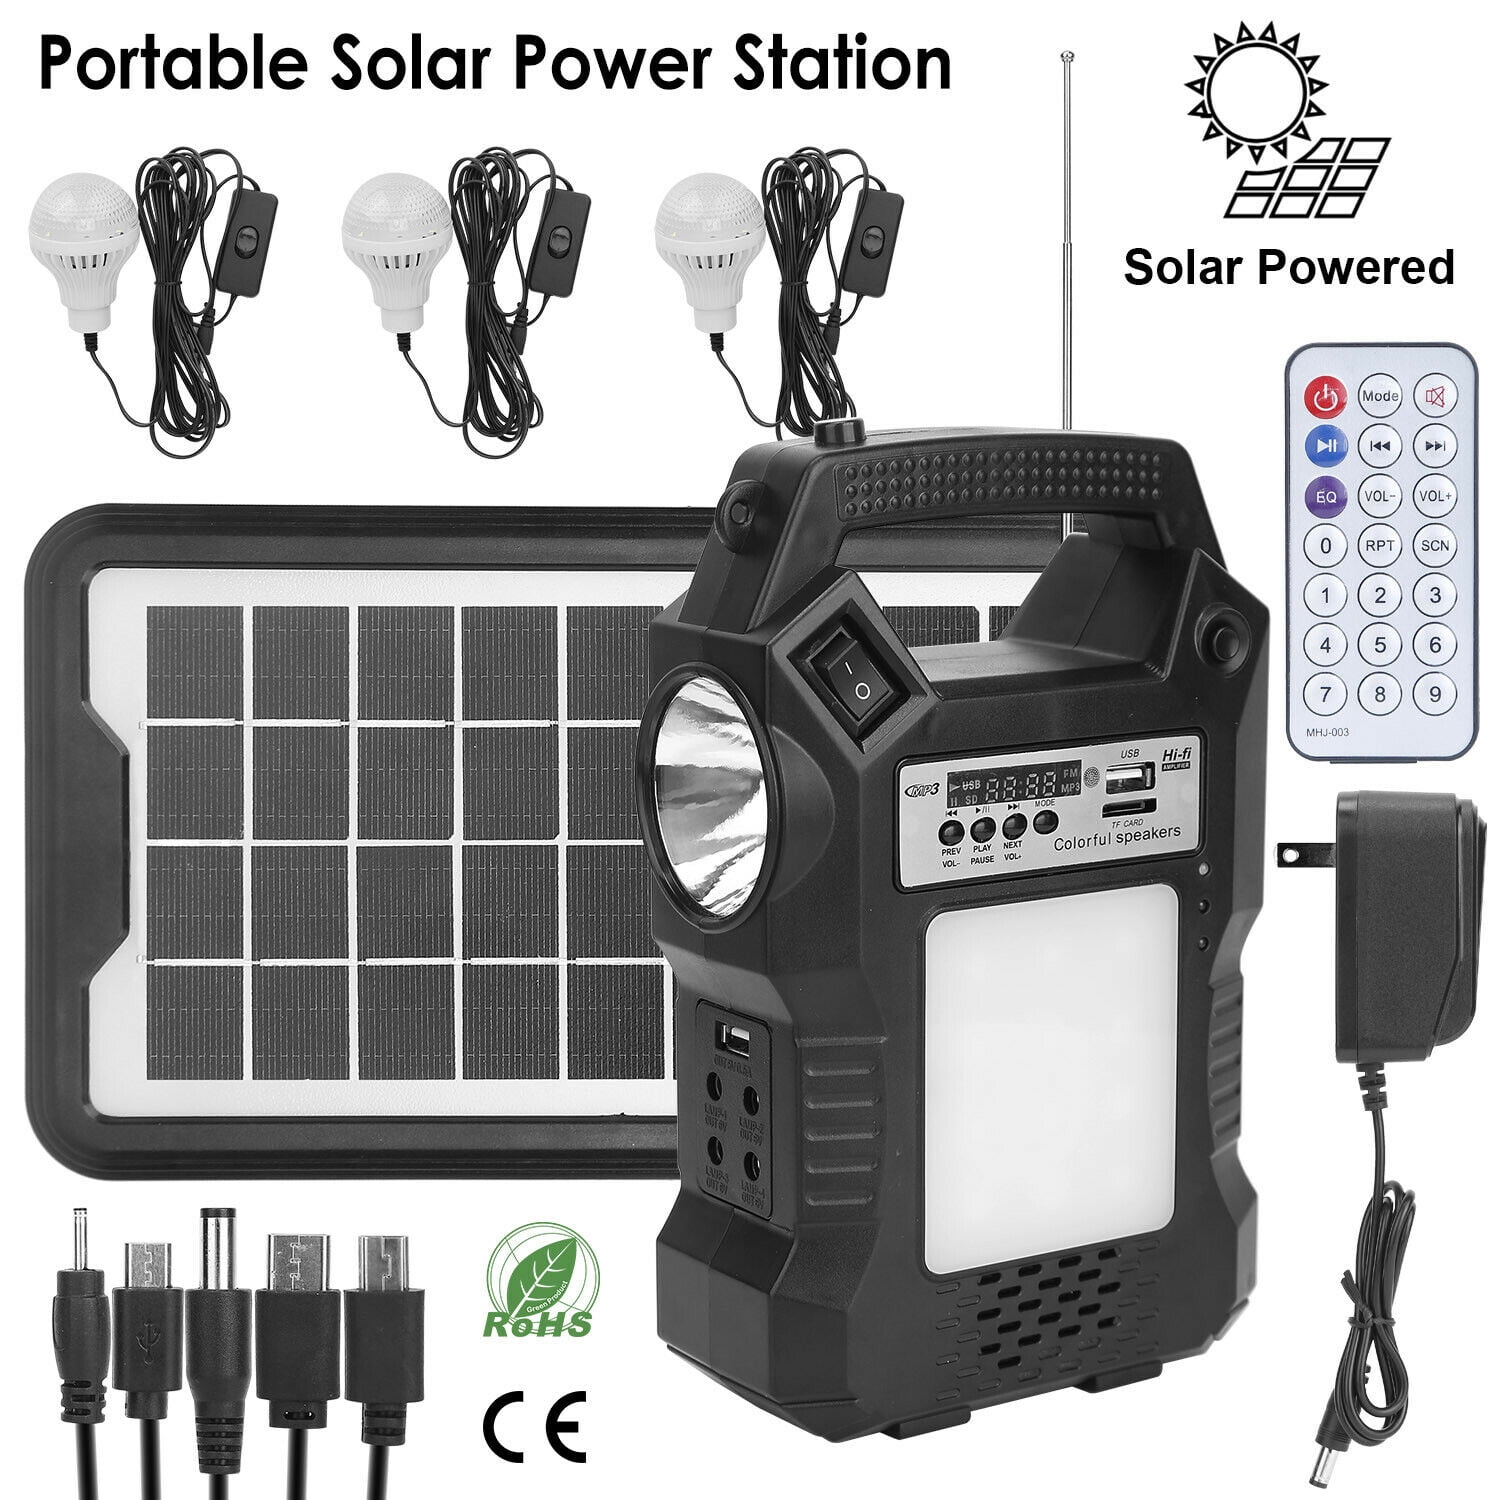 Solar Generator Portable Power Station with Solar Panel, 8000mAh Battery 3 Bulbs Flashlights Fm Radio for Home Outdoors Camping Travel Emergency - Walmart.com